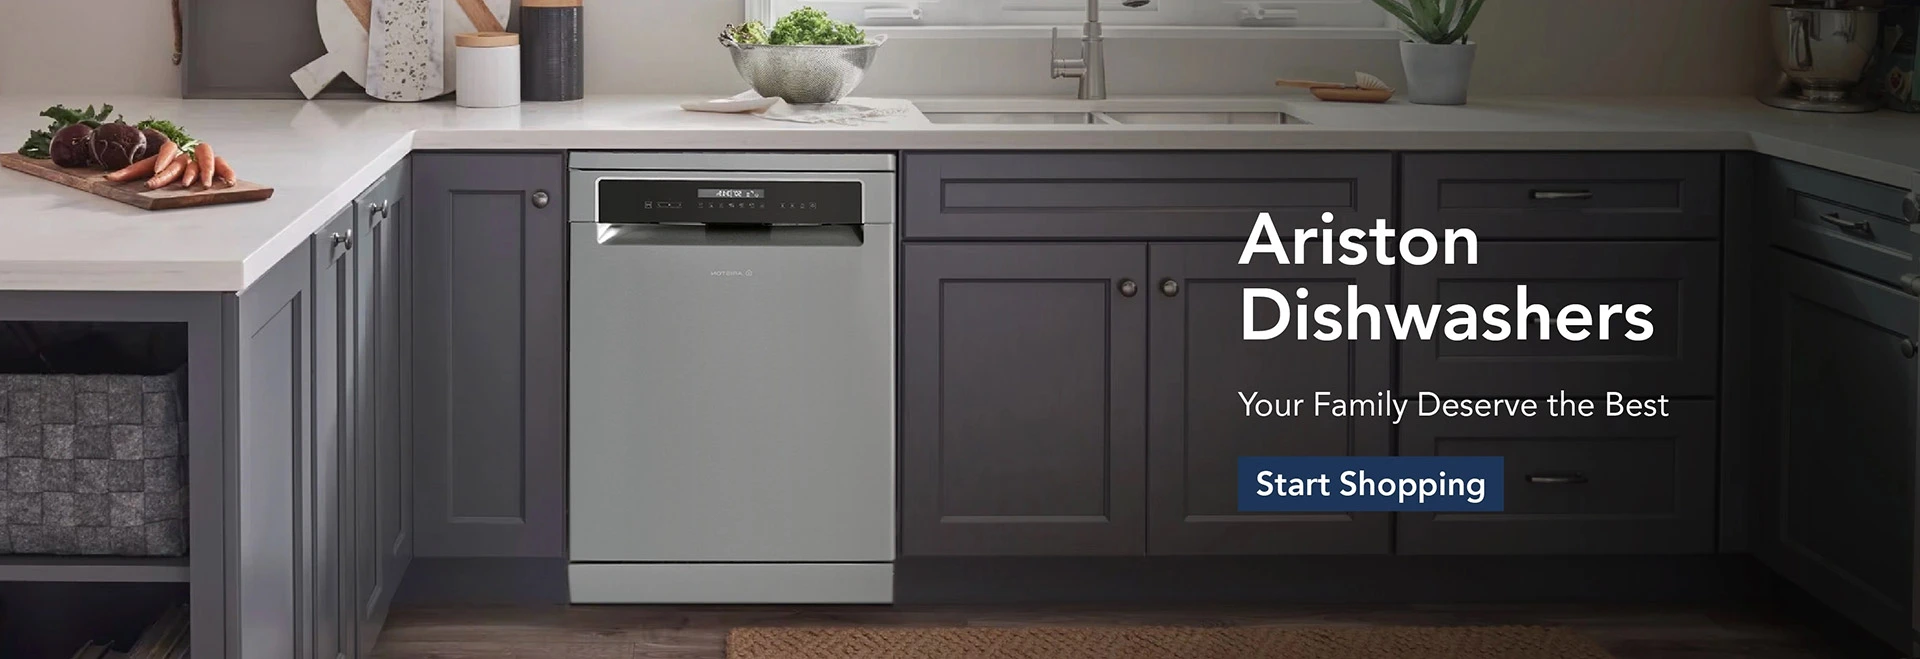 ariston dishwasher